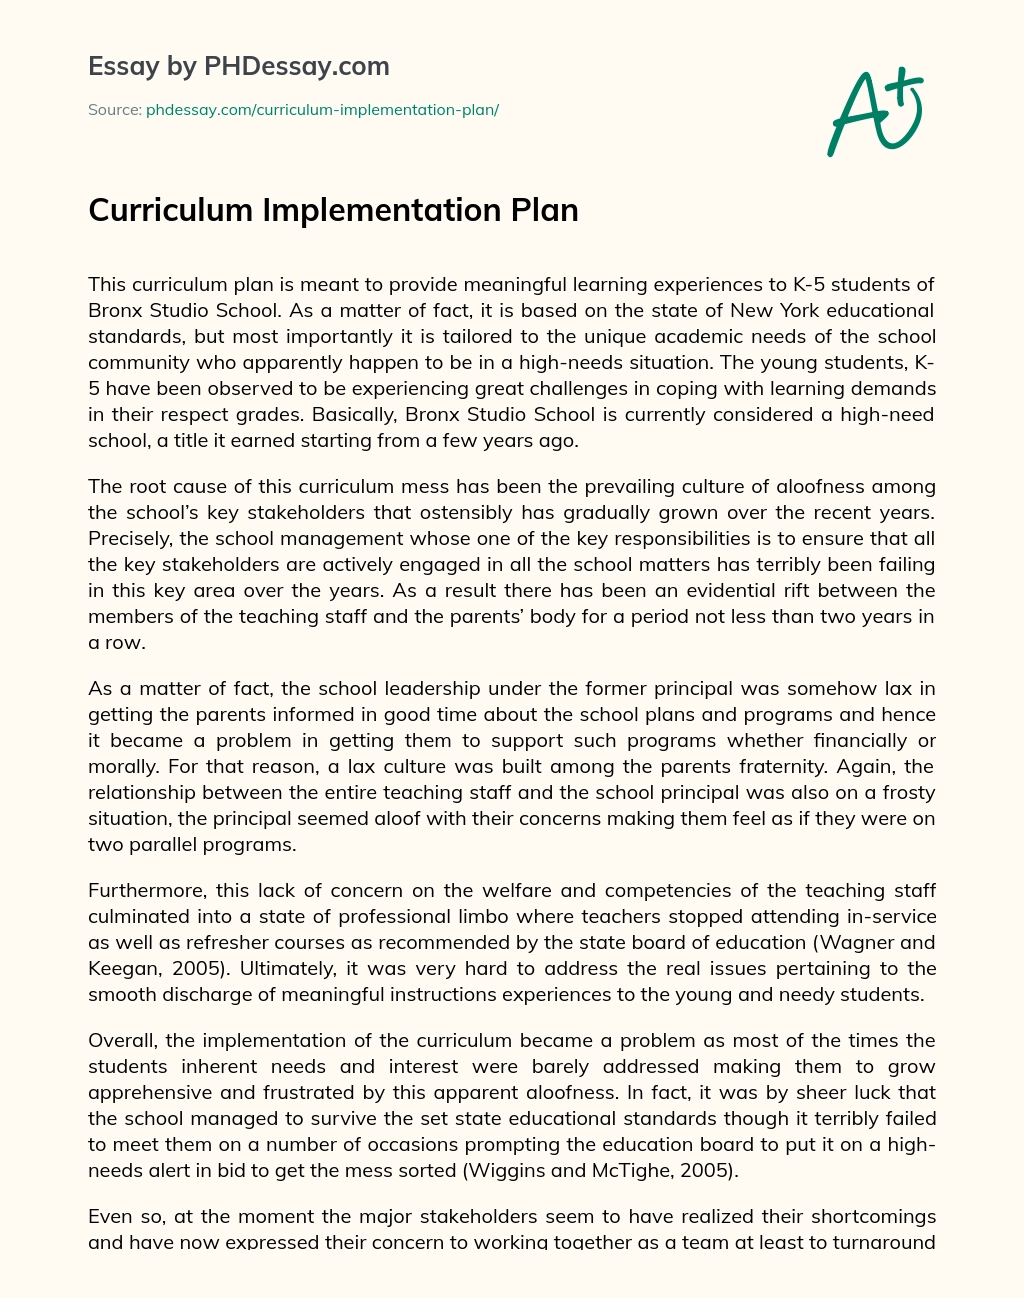 Curriculum Implementation Plan Phdessay 